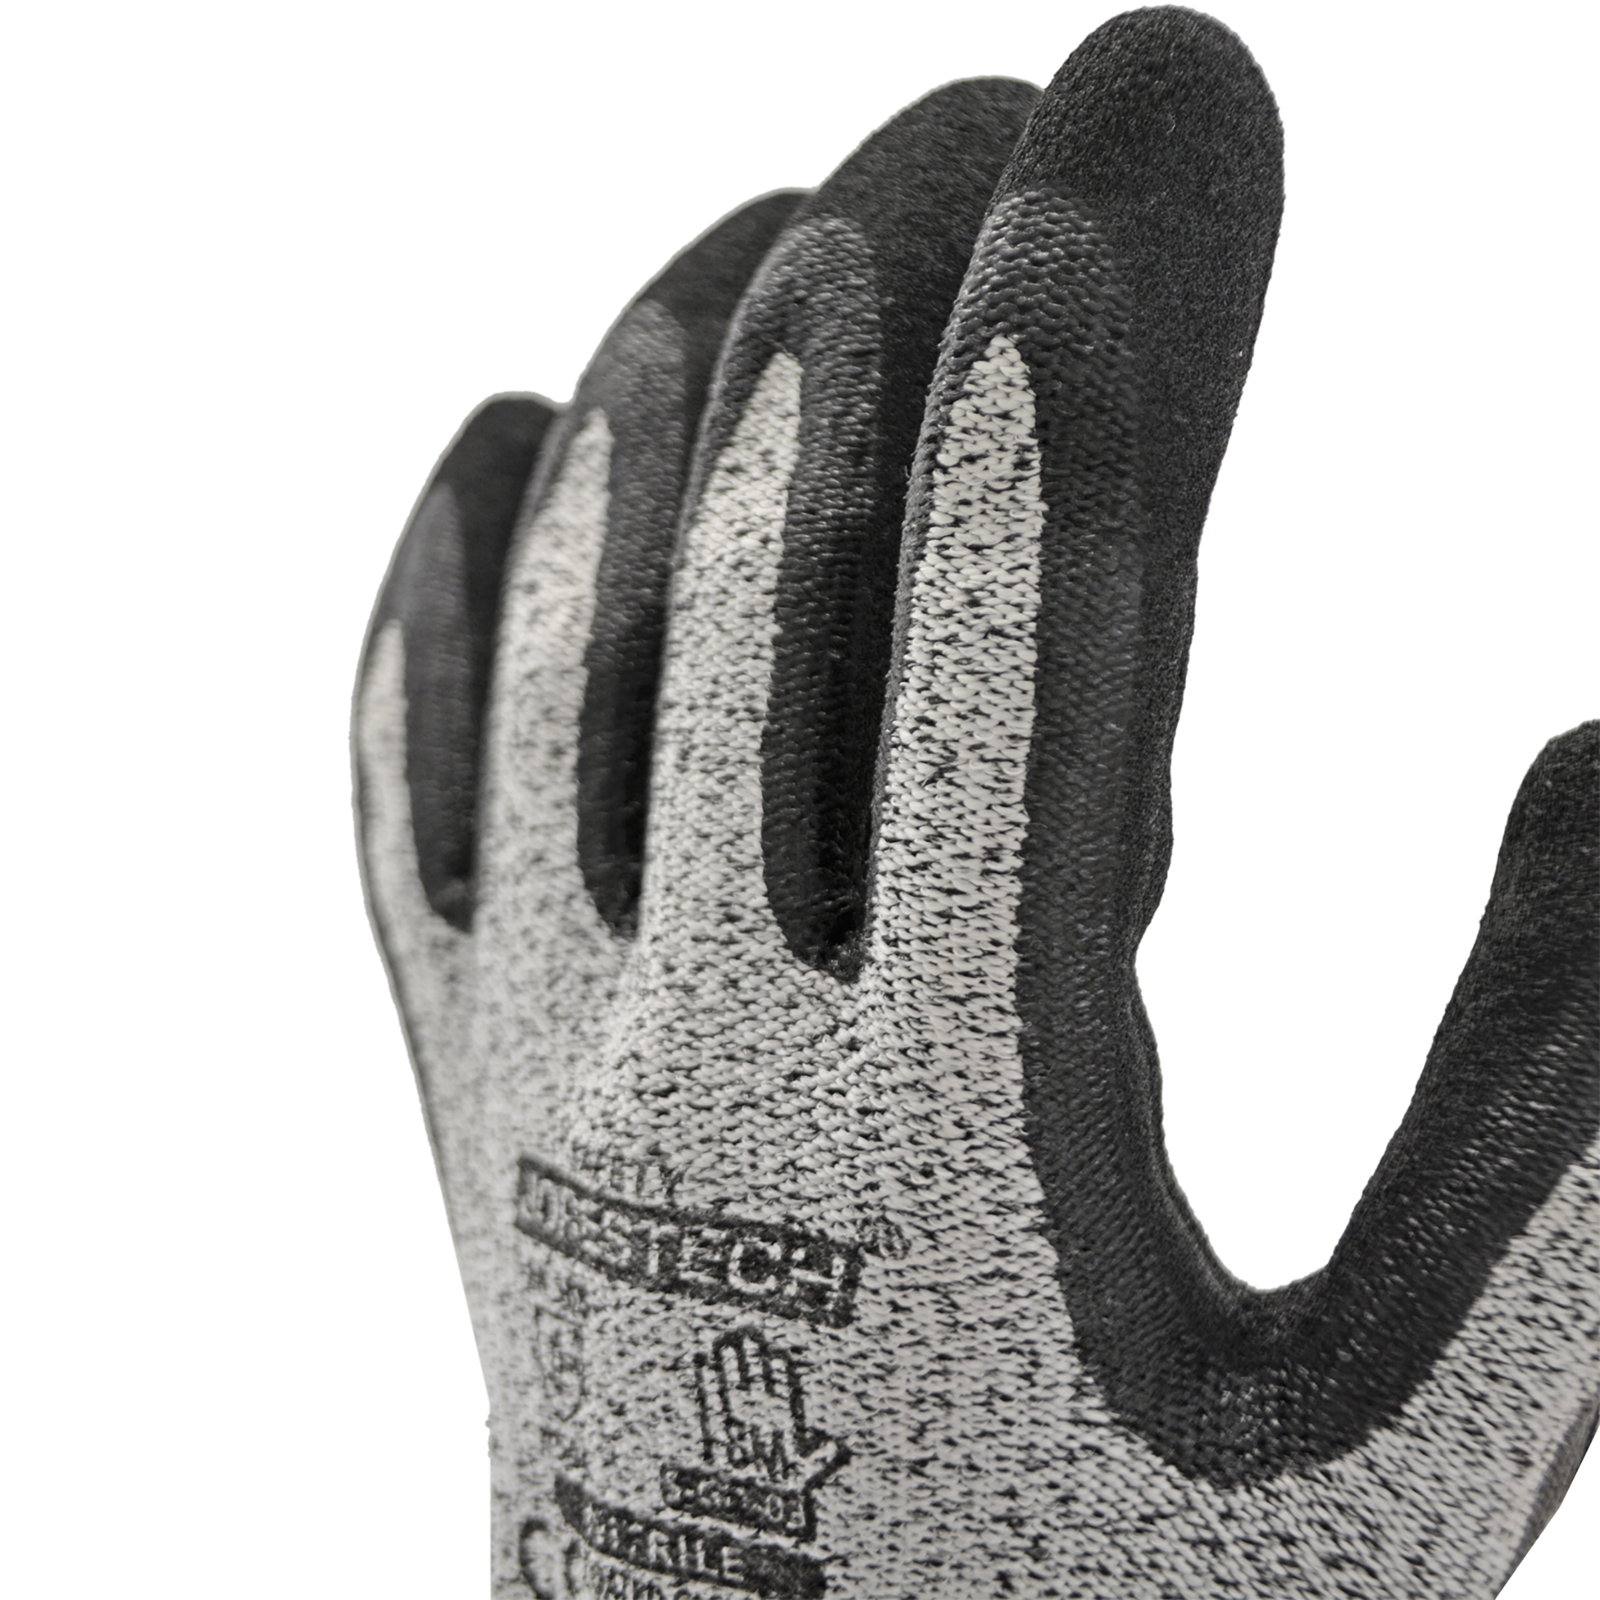 X15 Sandy Nitrile KorPlex Impact High Cut Resist Glove PK 12 – X1